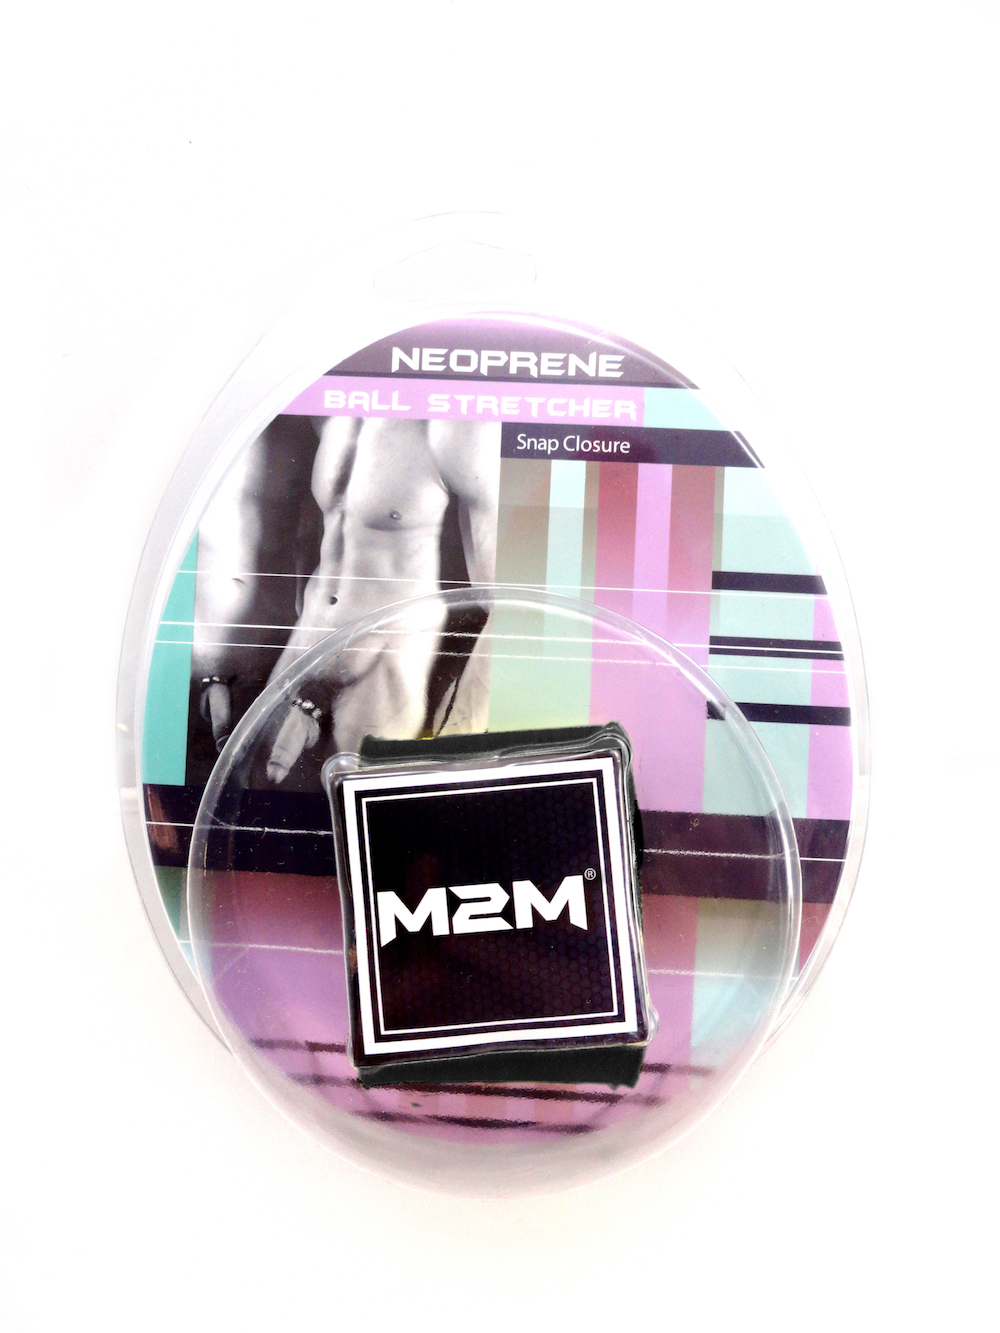 M2M NEOPRENE BALL STRETCHER 1.5 INCH - BLACK